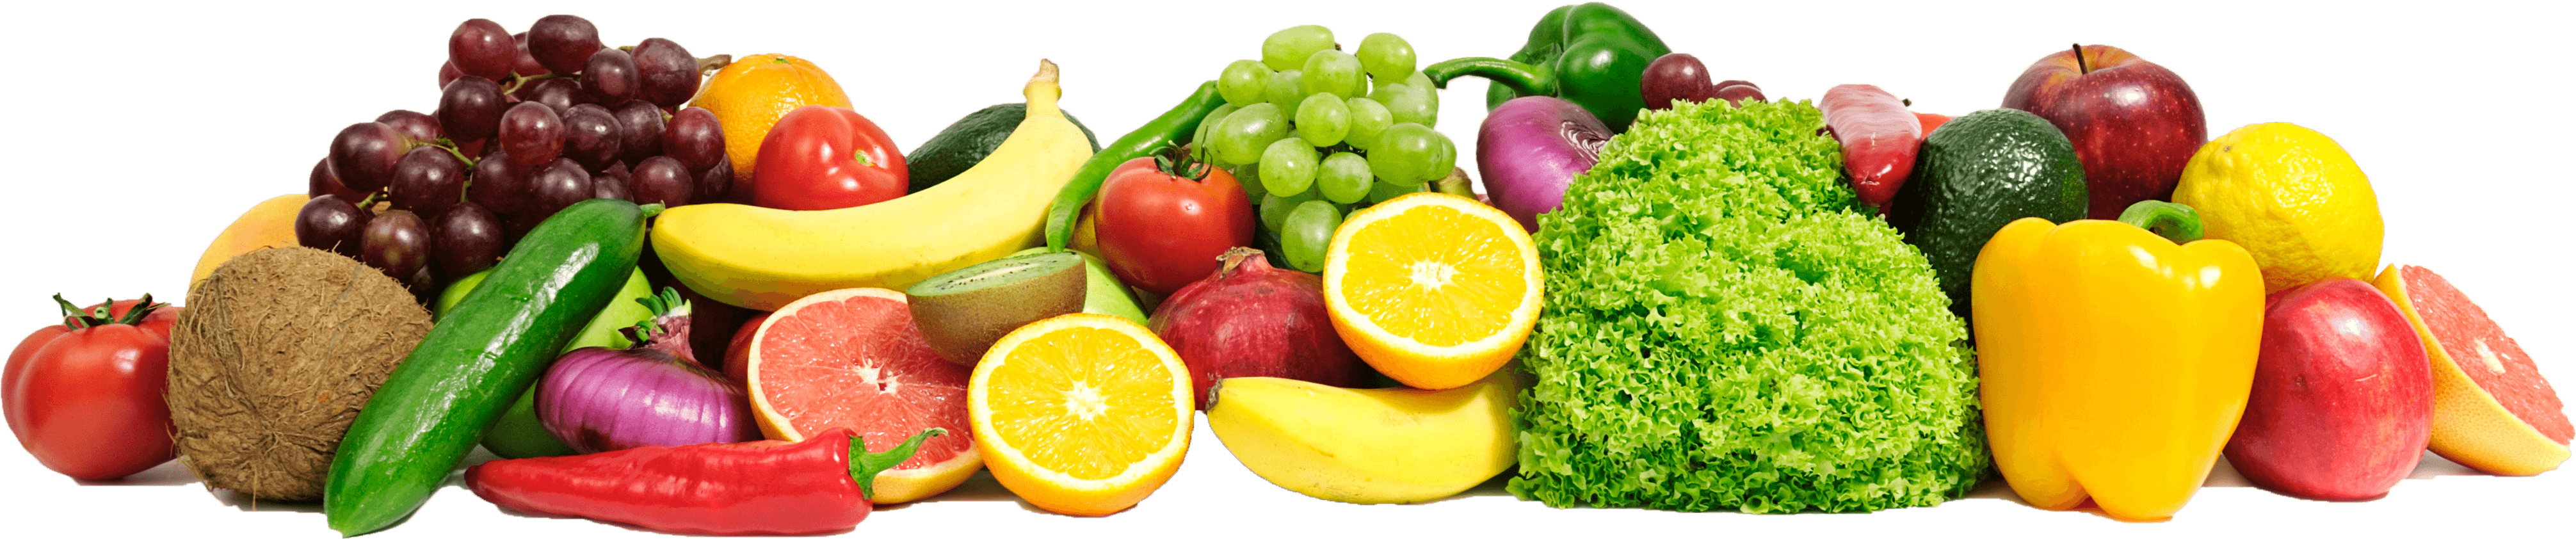 Vers fruit en groenten Transparante achtergrond